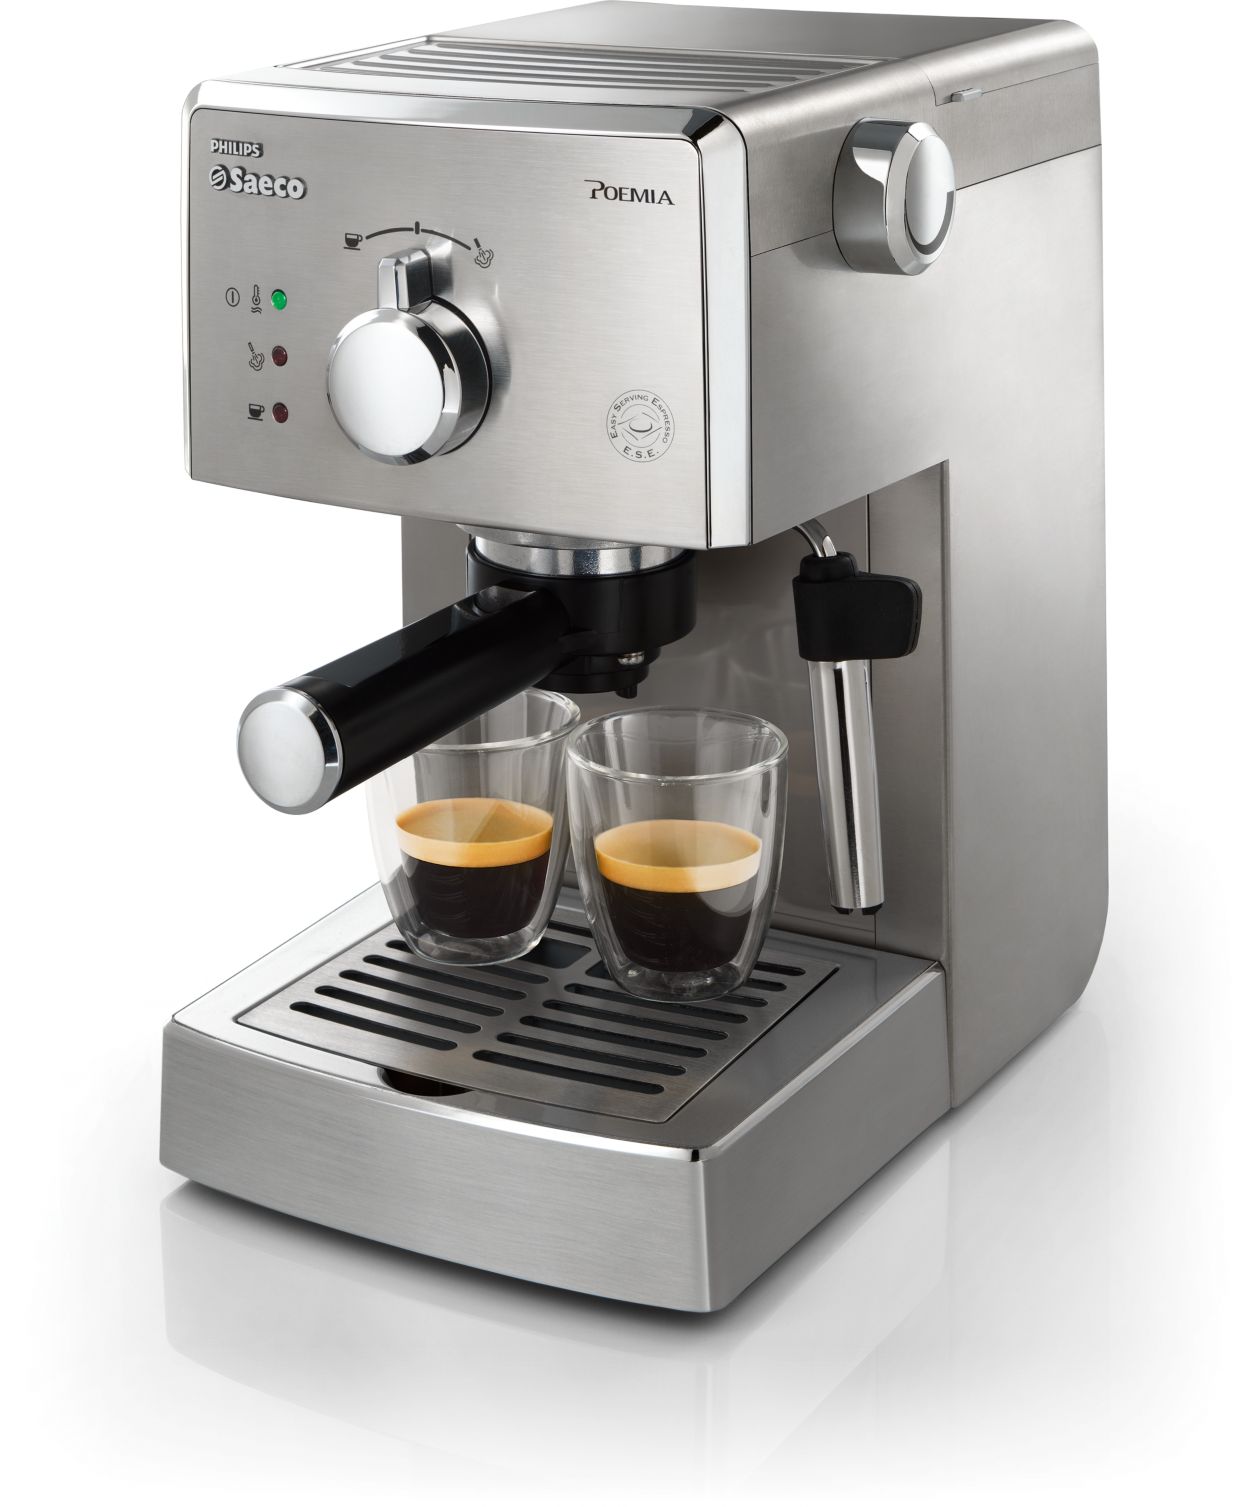 Philips Saeco Poemia Manual Espresso Machine (Stainless Steel) - HD8327